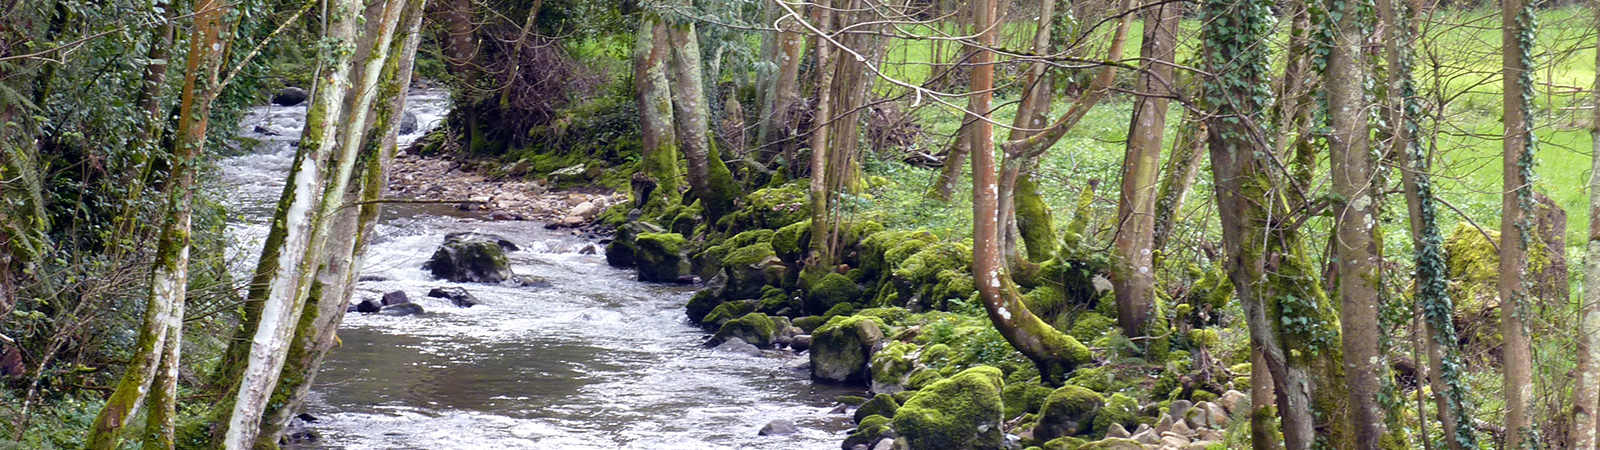 Río Nonaya